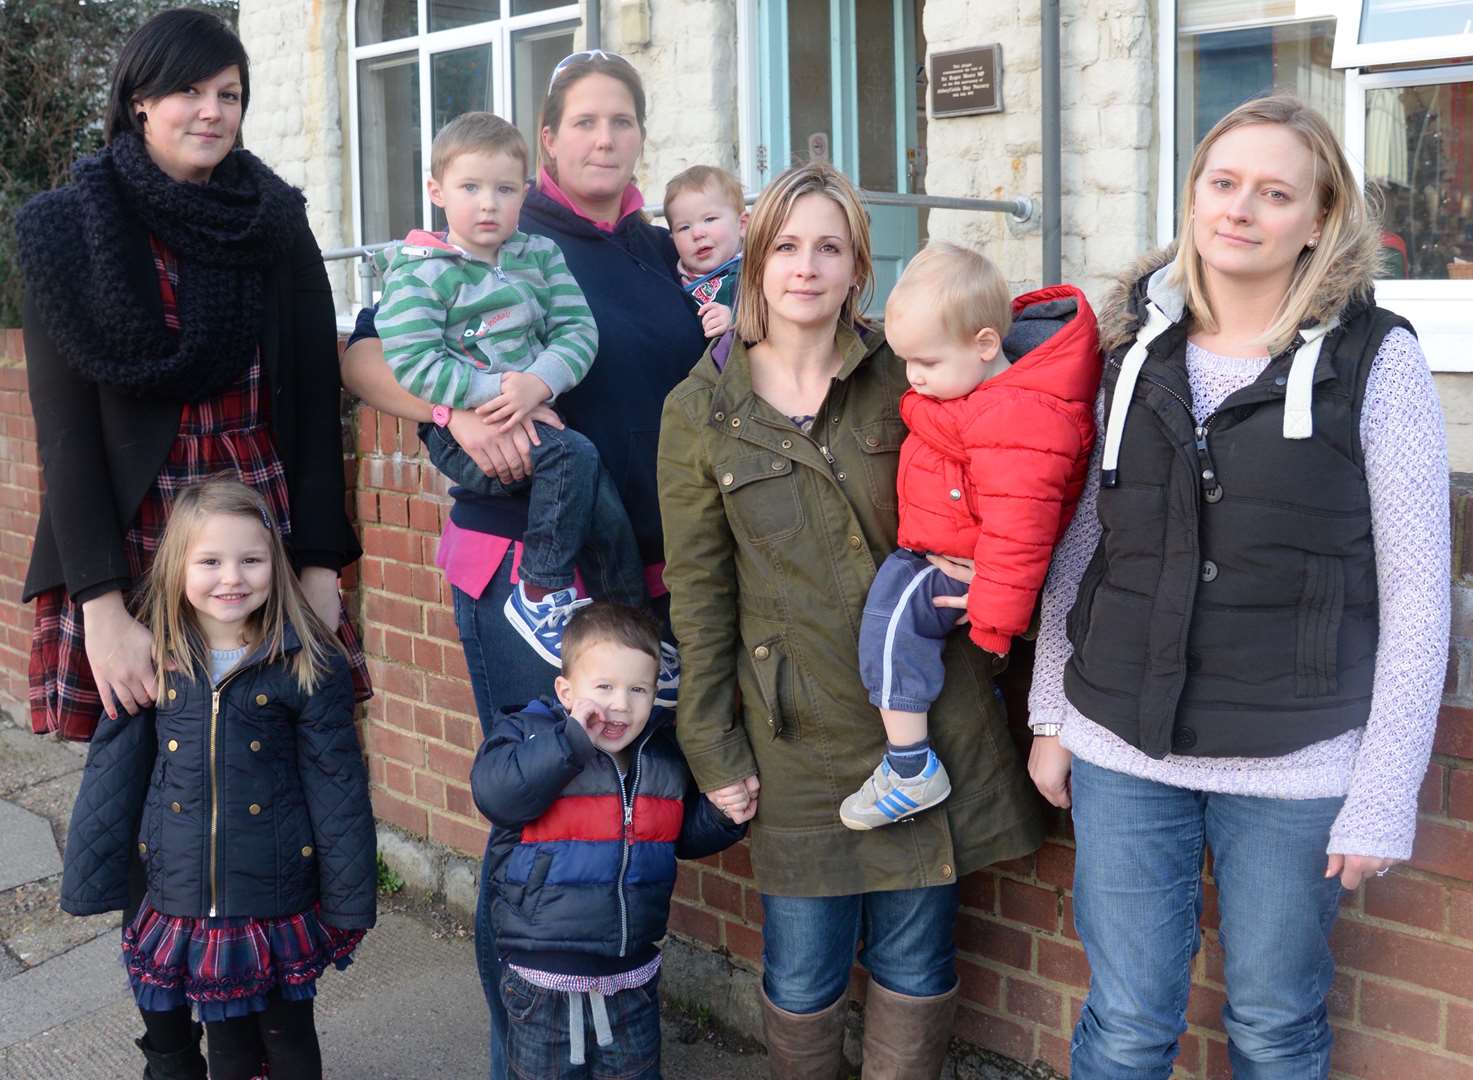 Parents' desperation as nursery 'closes'